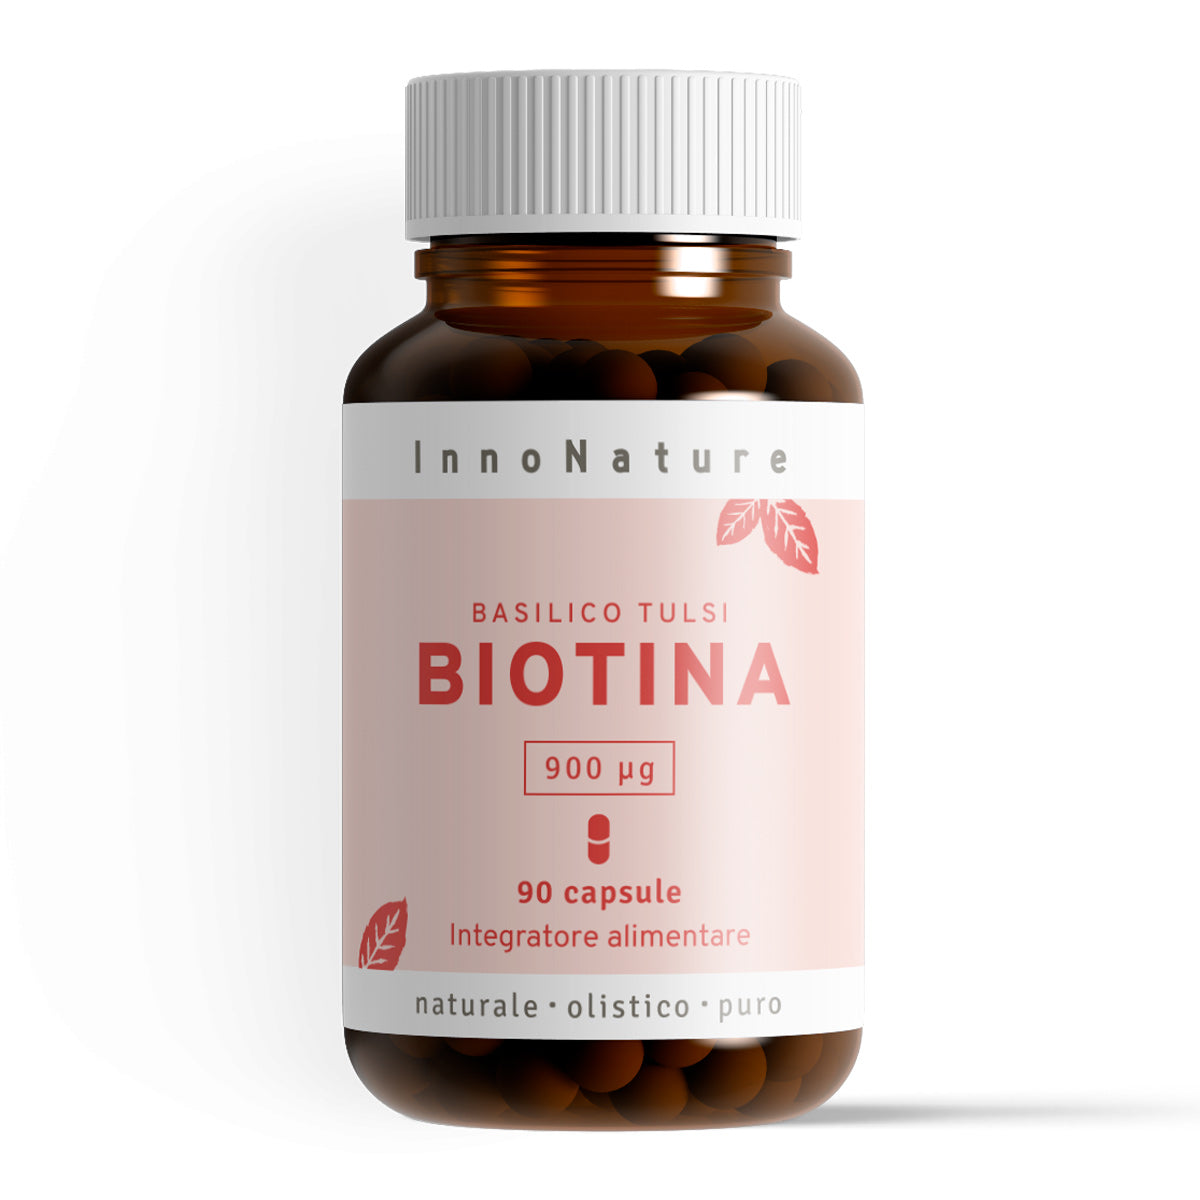 Capsule di Biotina: Vitamina B7 da basilico tulsi